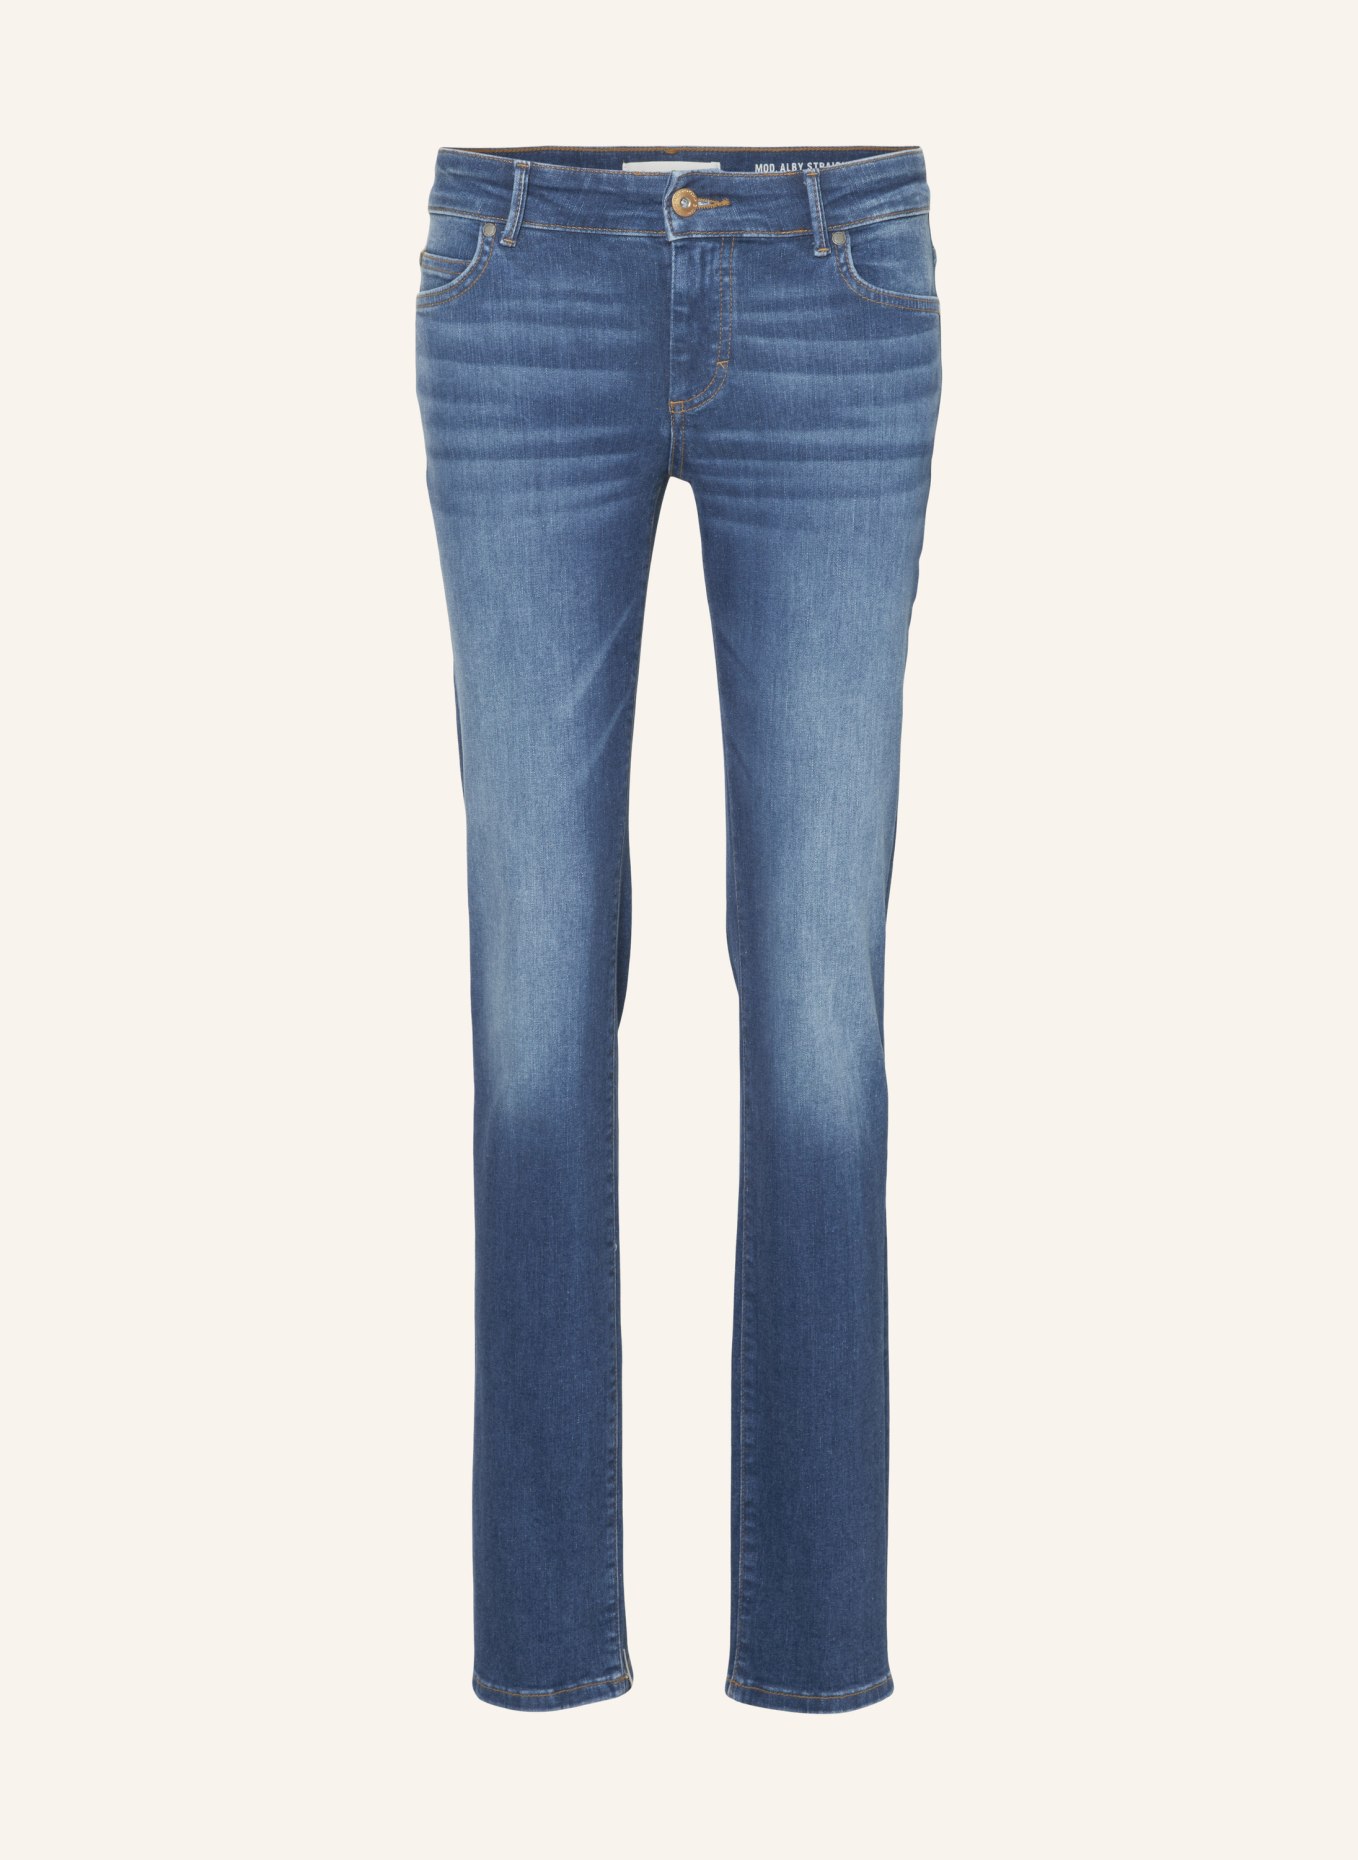 Marc O'Polo Jeans Modell ALBY straight, Farbe: DUNKELBLAU (Bild 1)